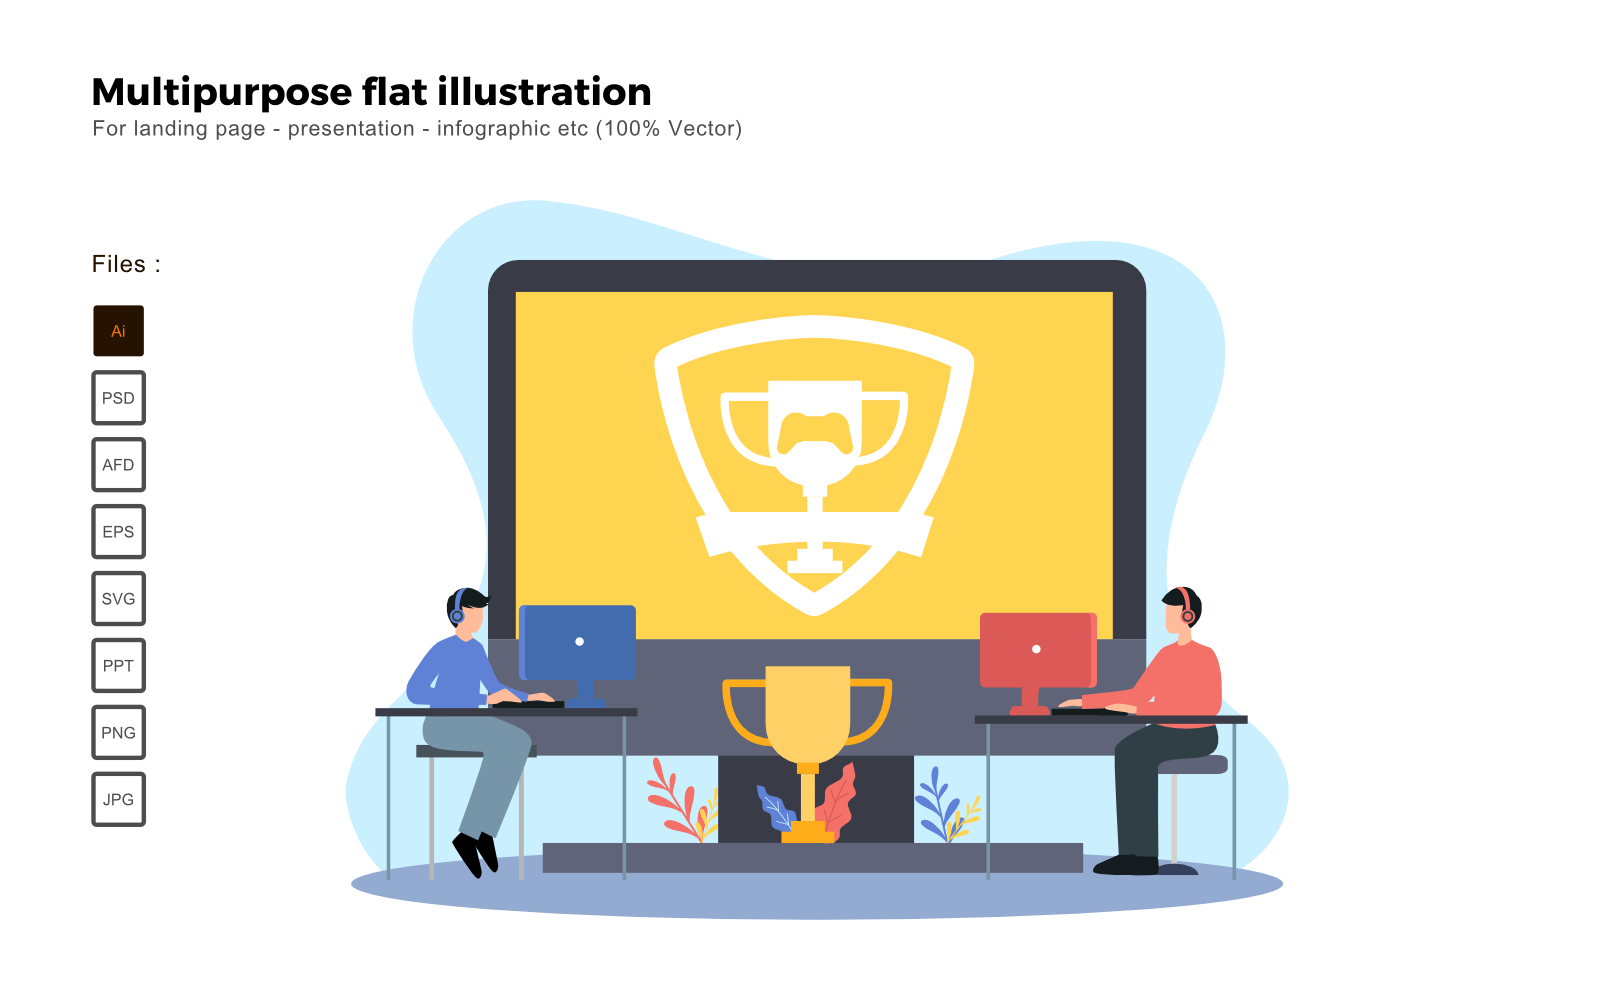 Multipurpose Flat Illustration Game - Vector Image